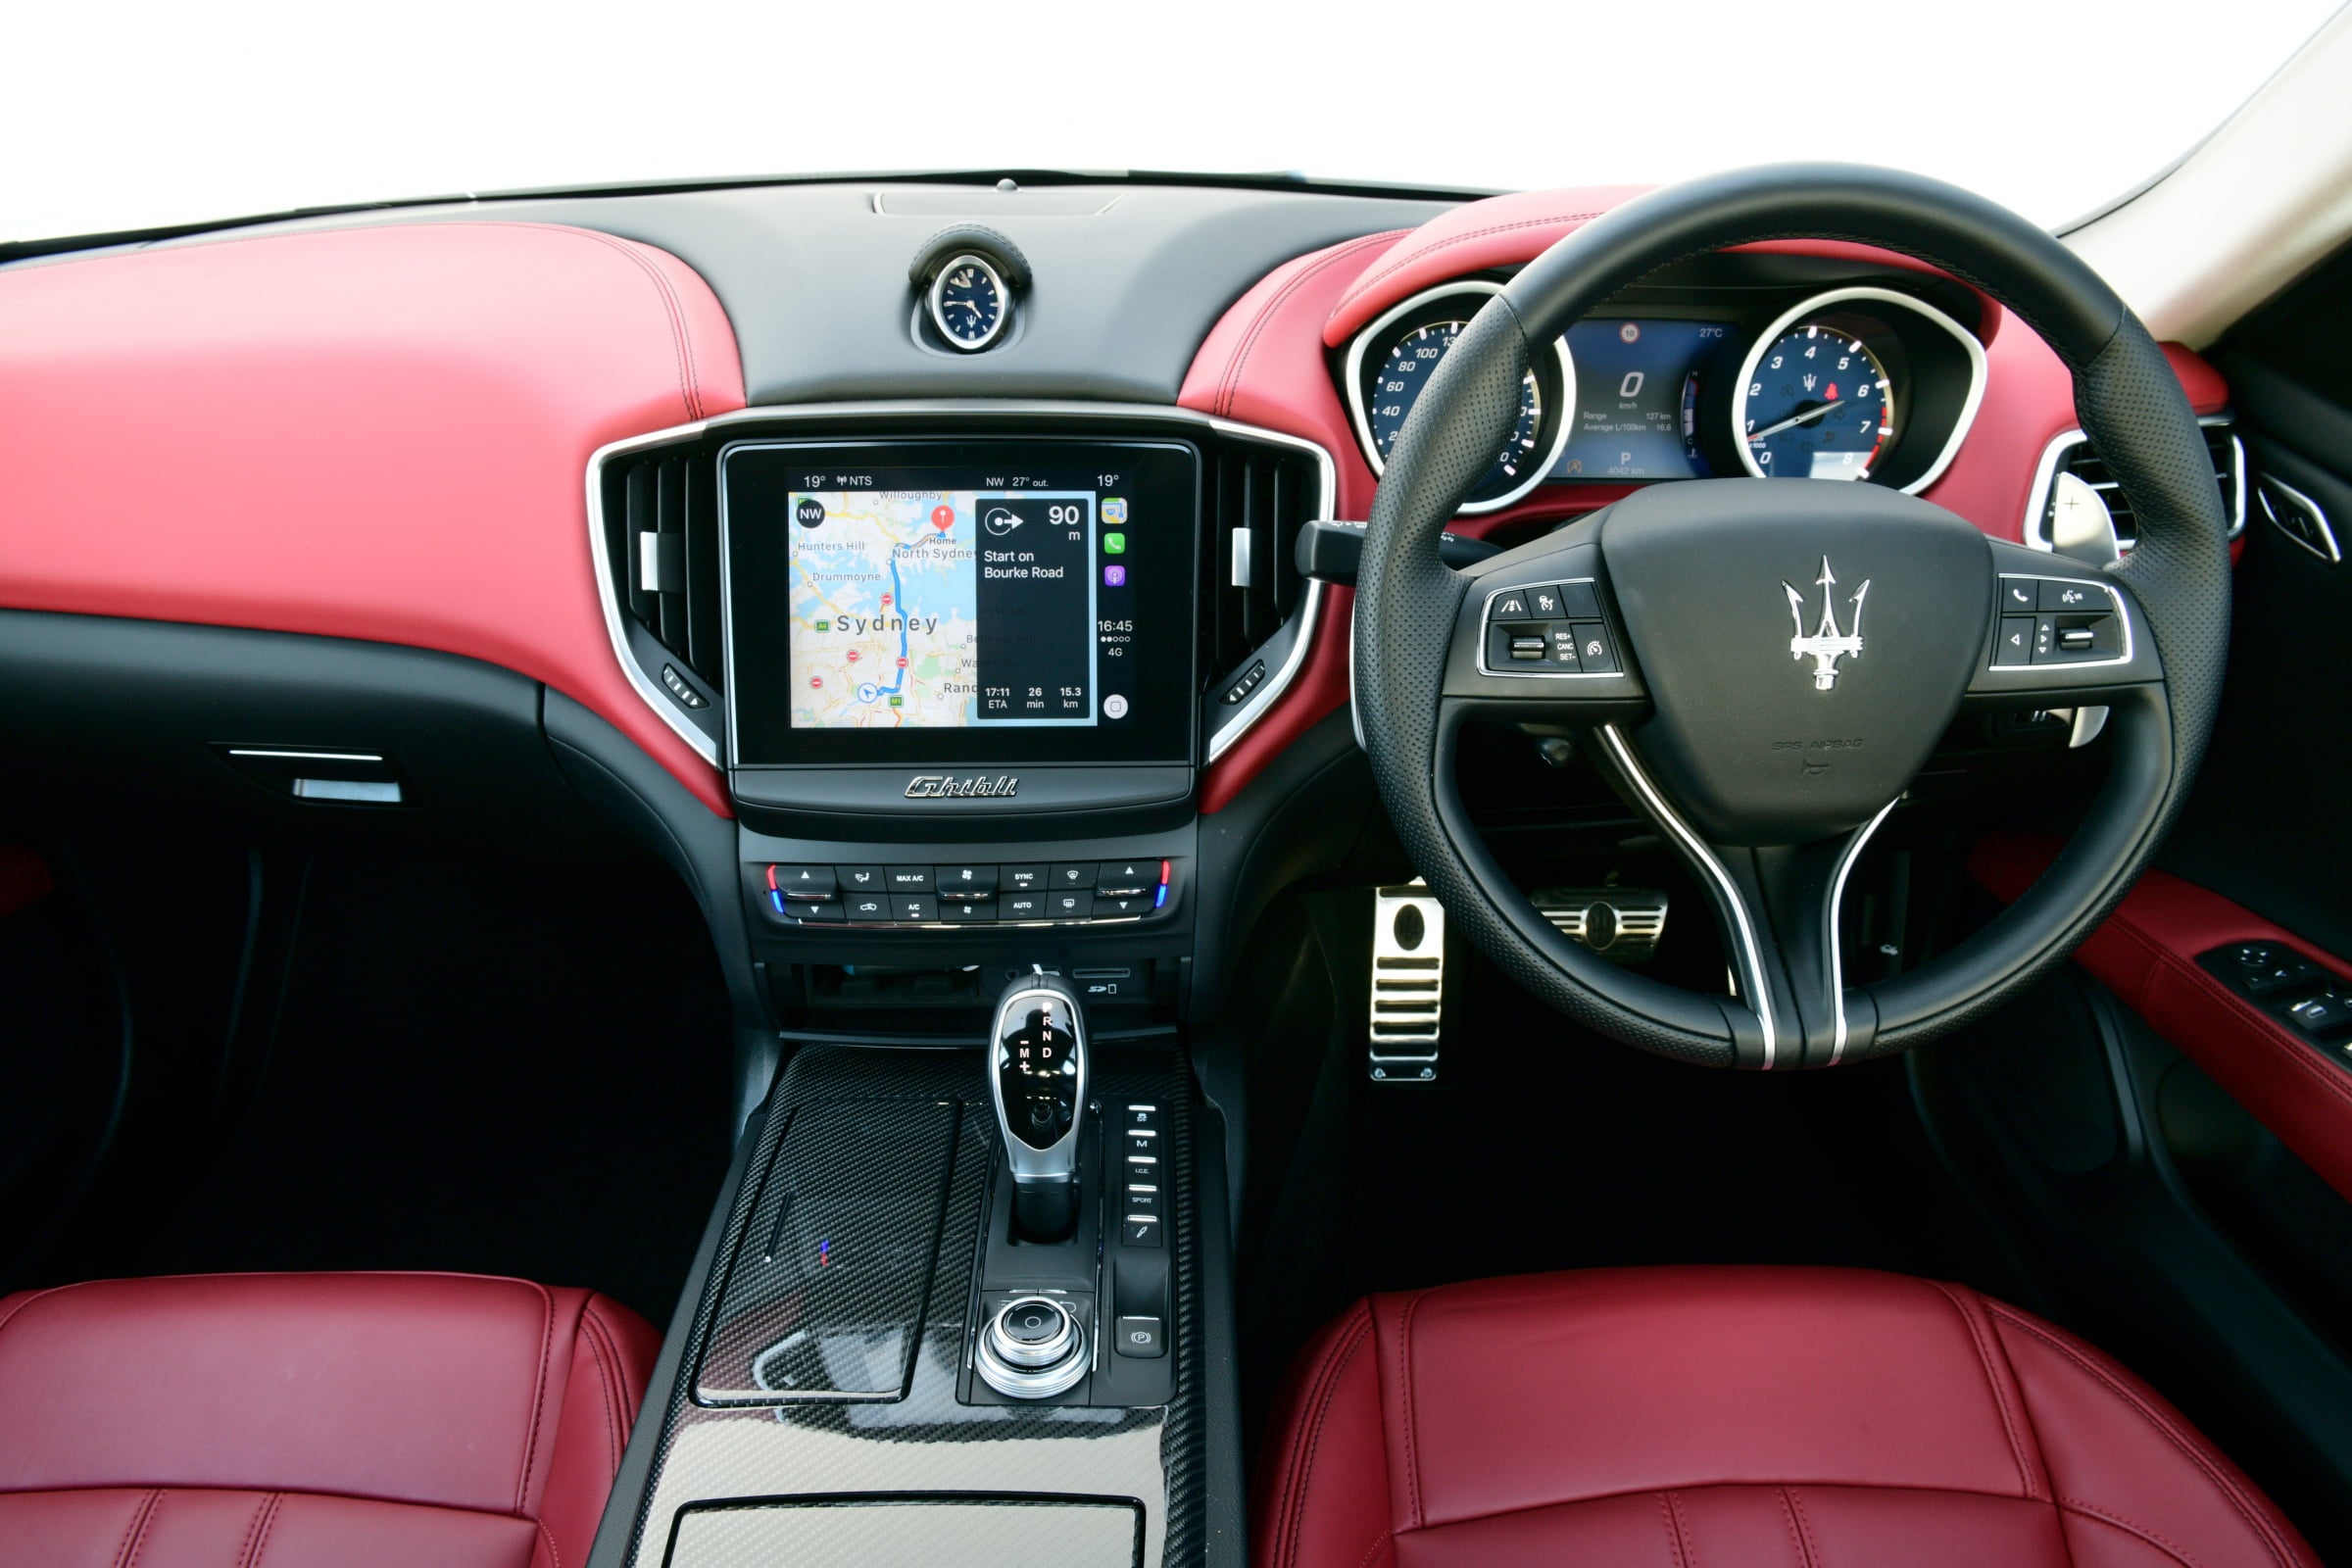 Maserati Ghibli interior